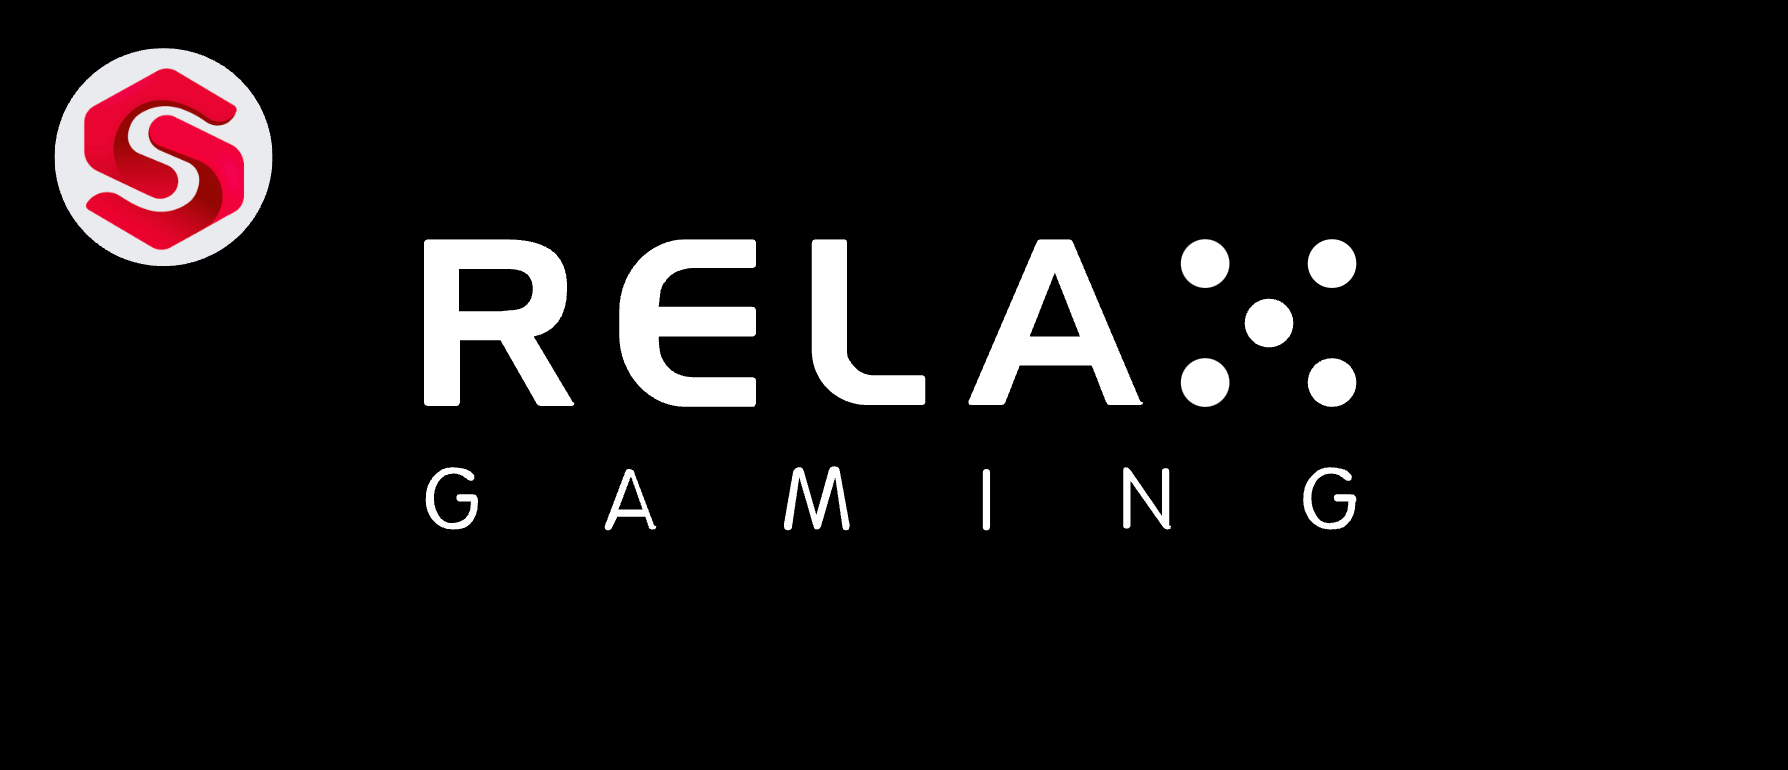 Relax Gaming and SmartSoft Gaming agree partnership